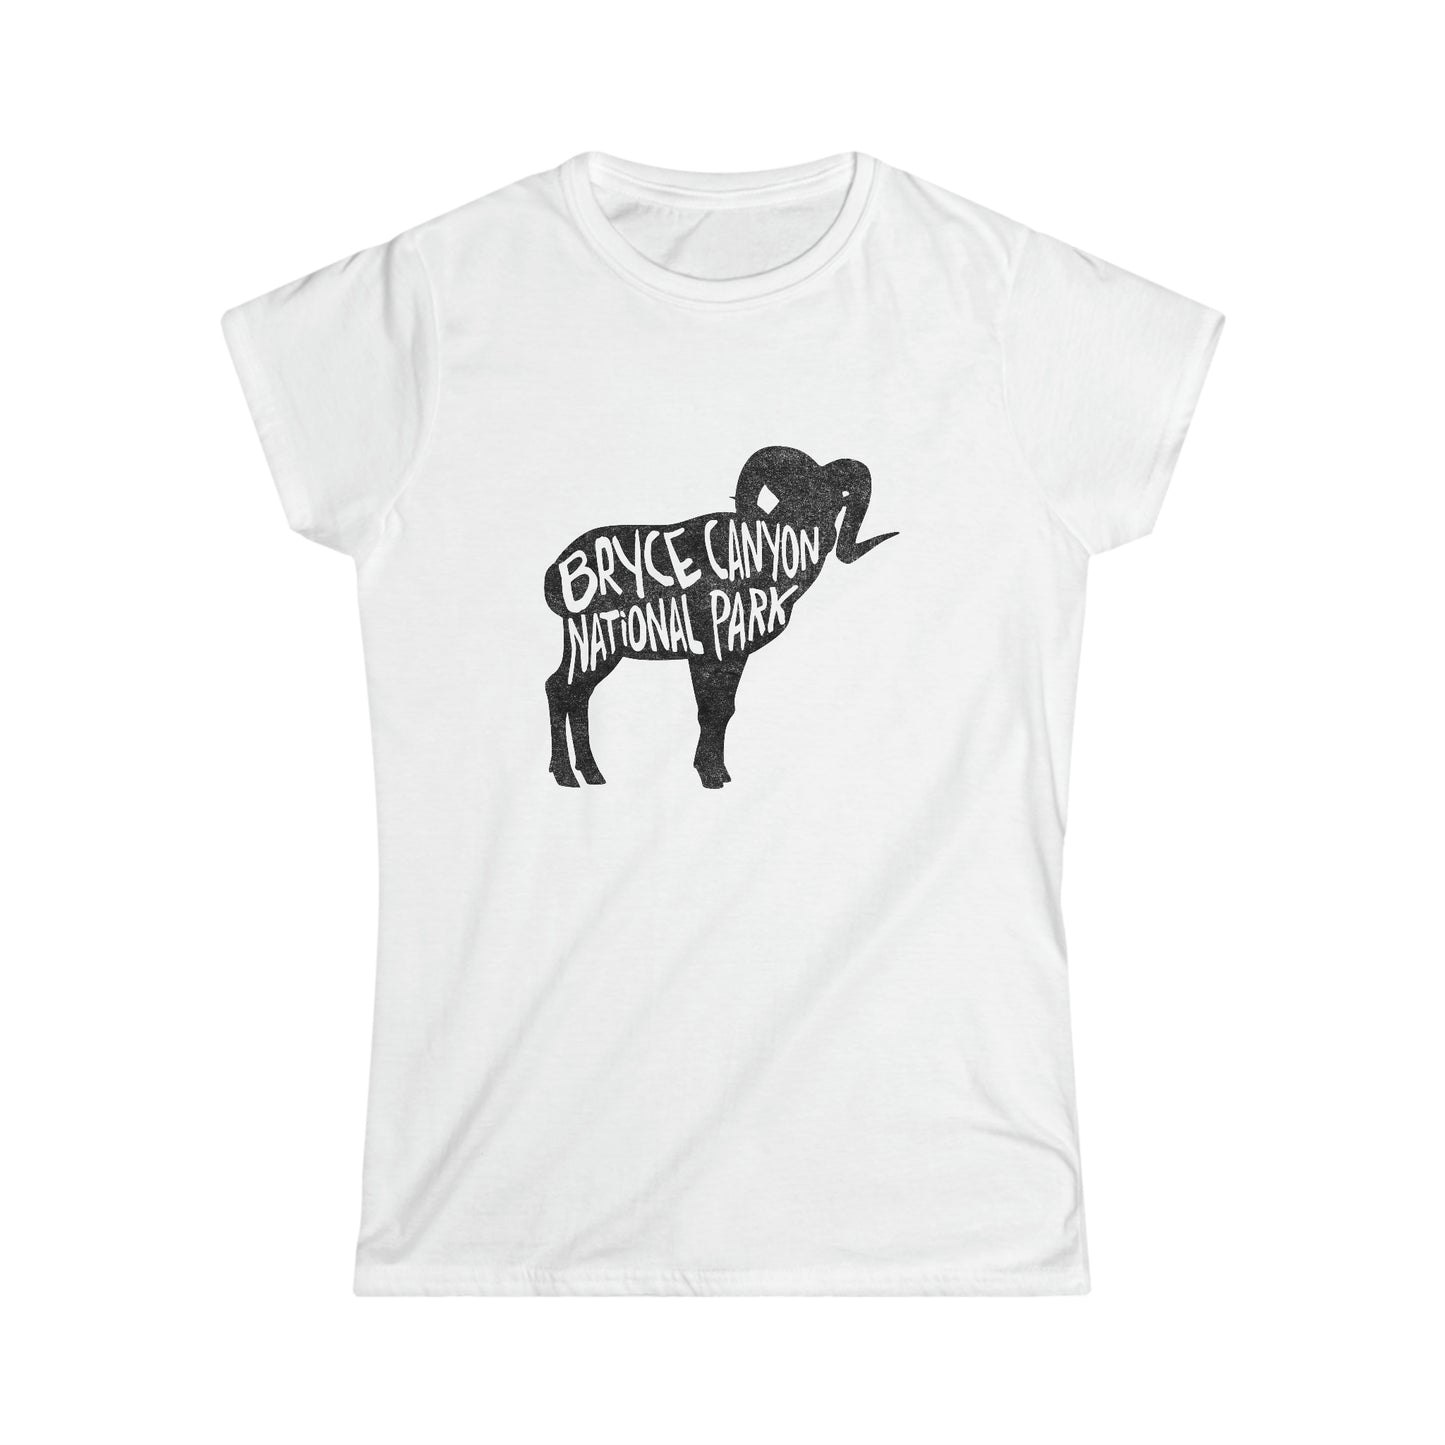 Bryce Canyon National Park Women's T-Shirt - Bighorn Sheep